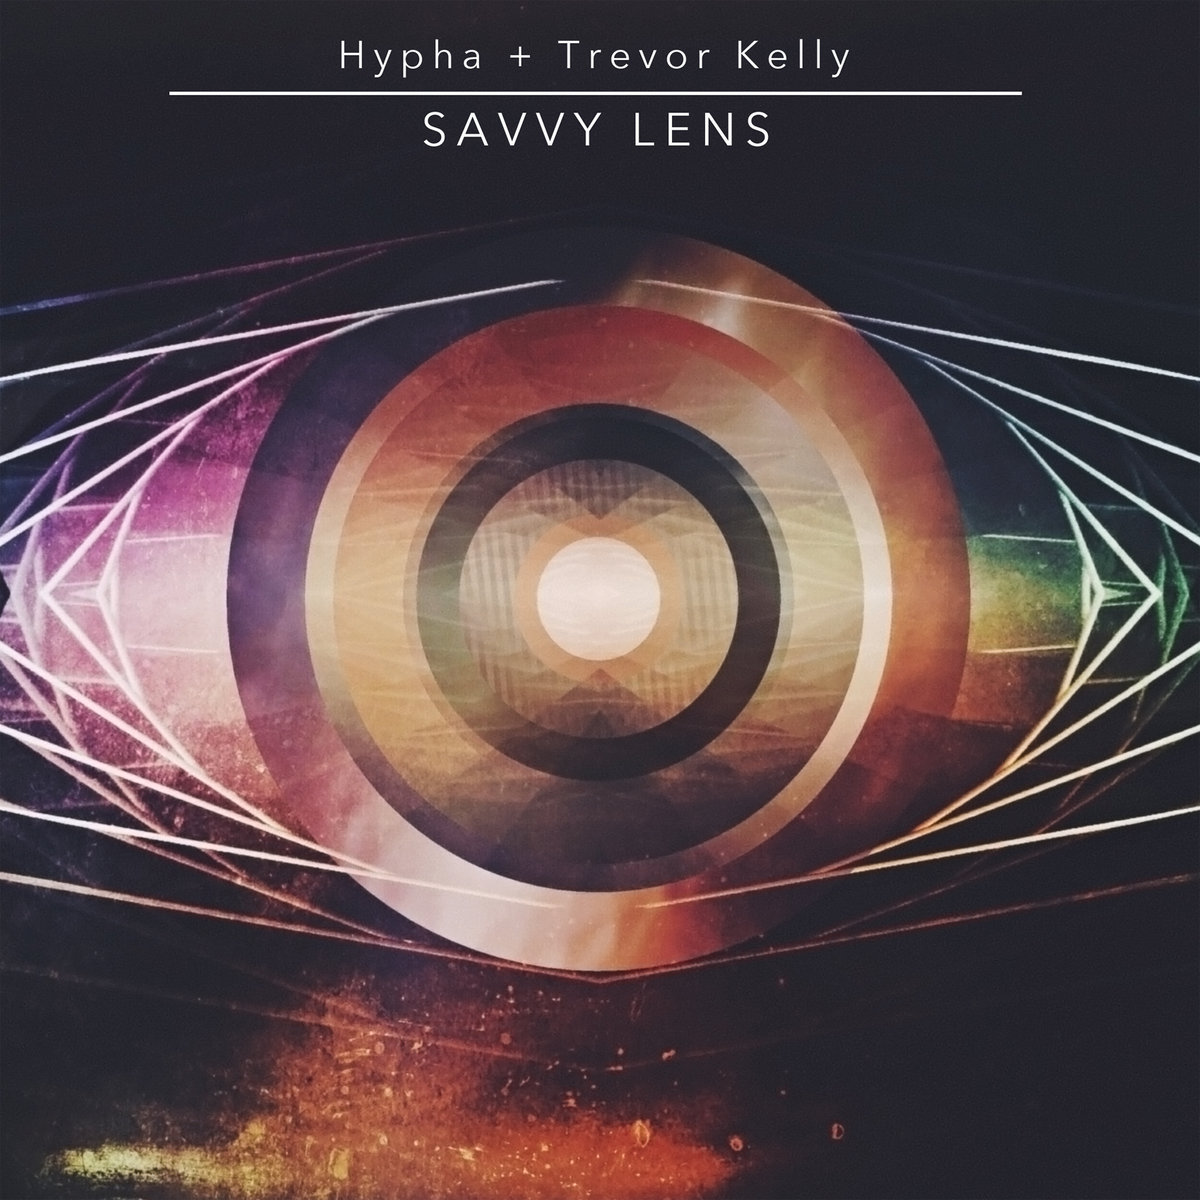 Trevor Kelly - Geeked (Hypha Remix) @ 'Savvy Lens' album (Austin)